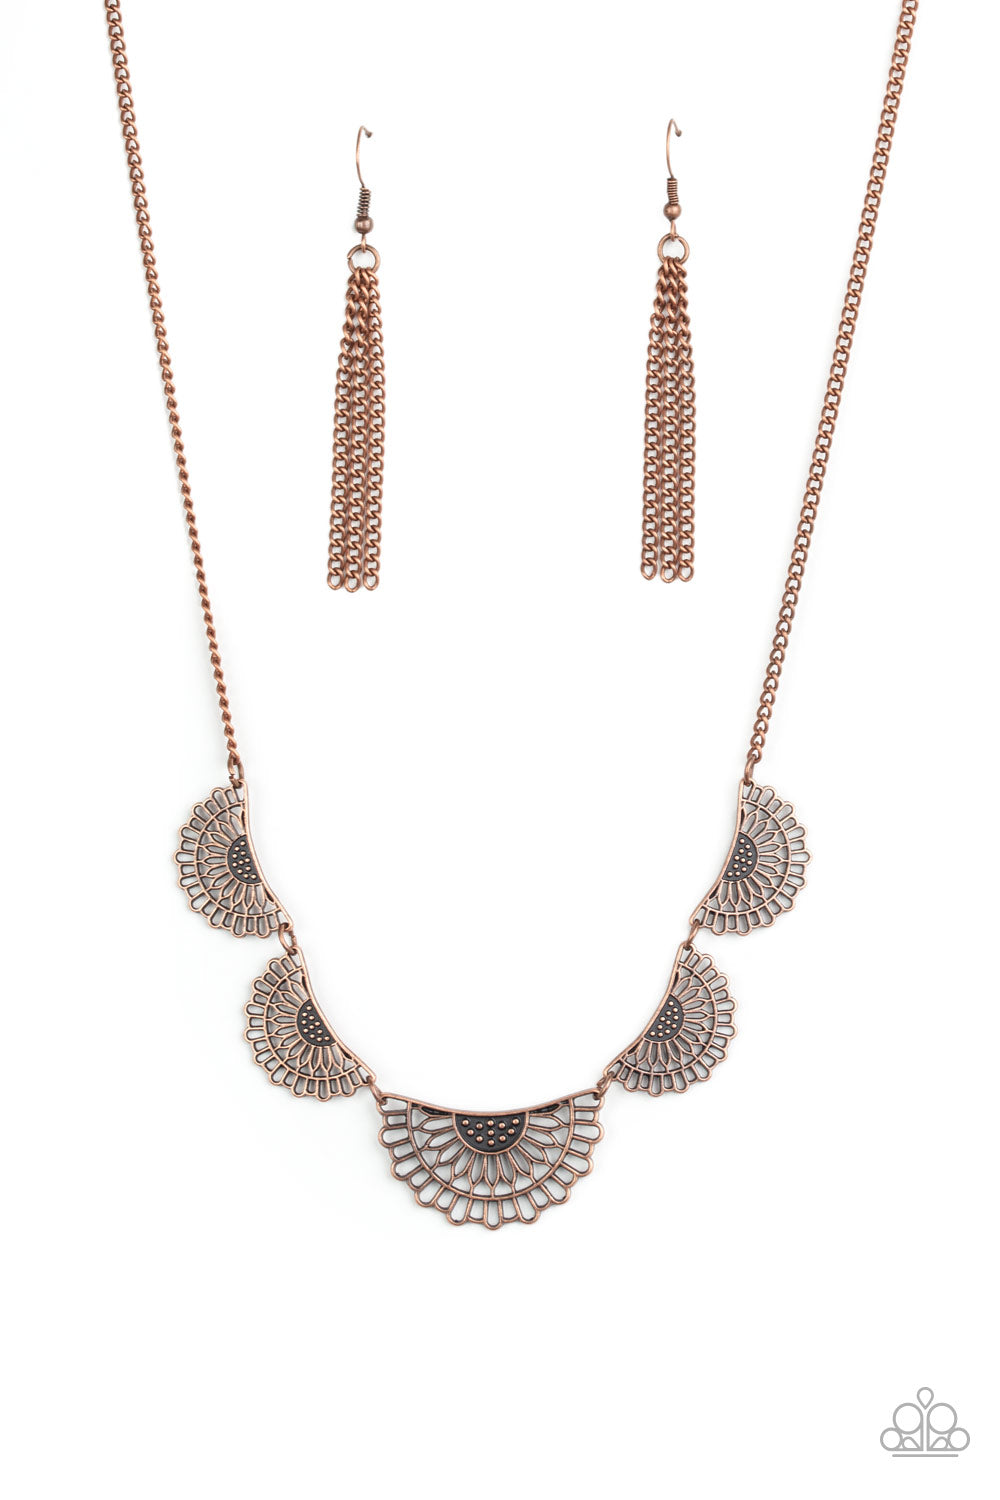 Fanned Out Fashion - Copper Necklace Set